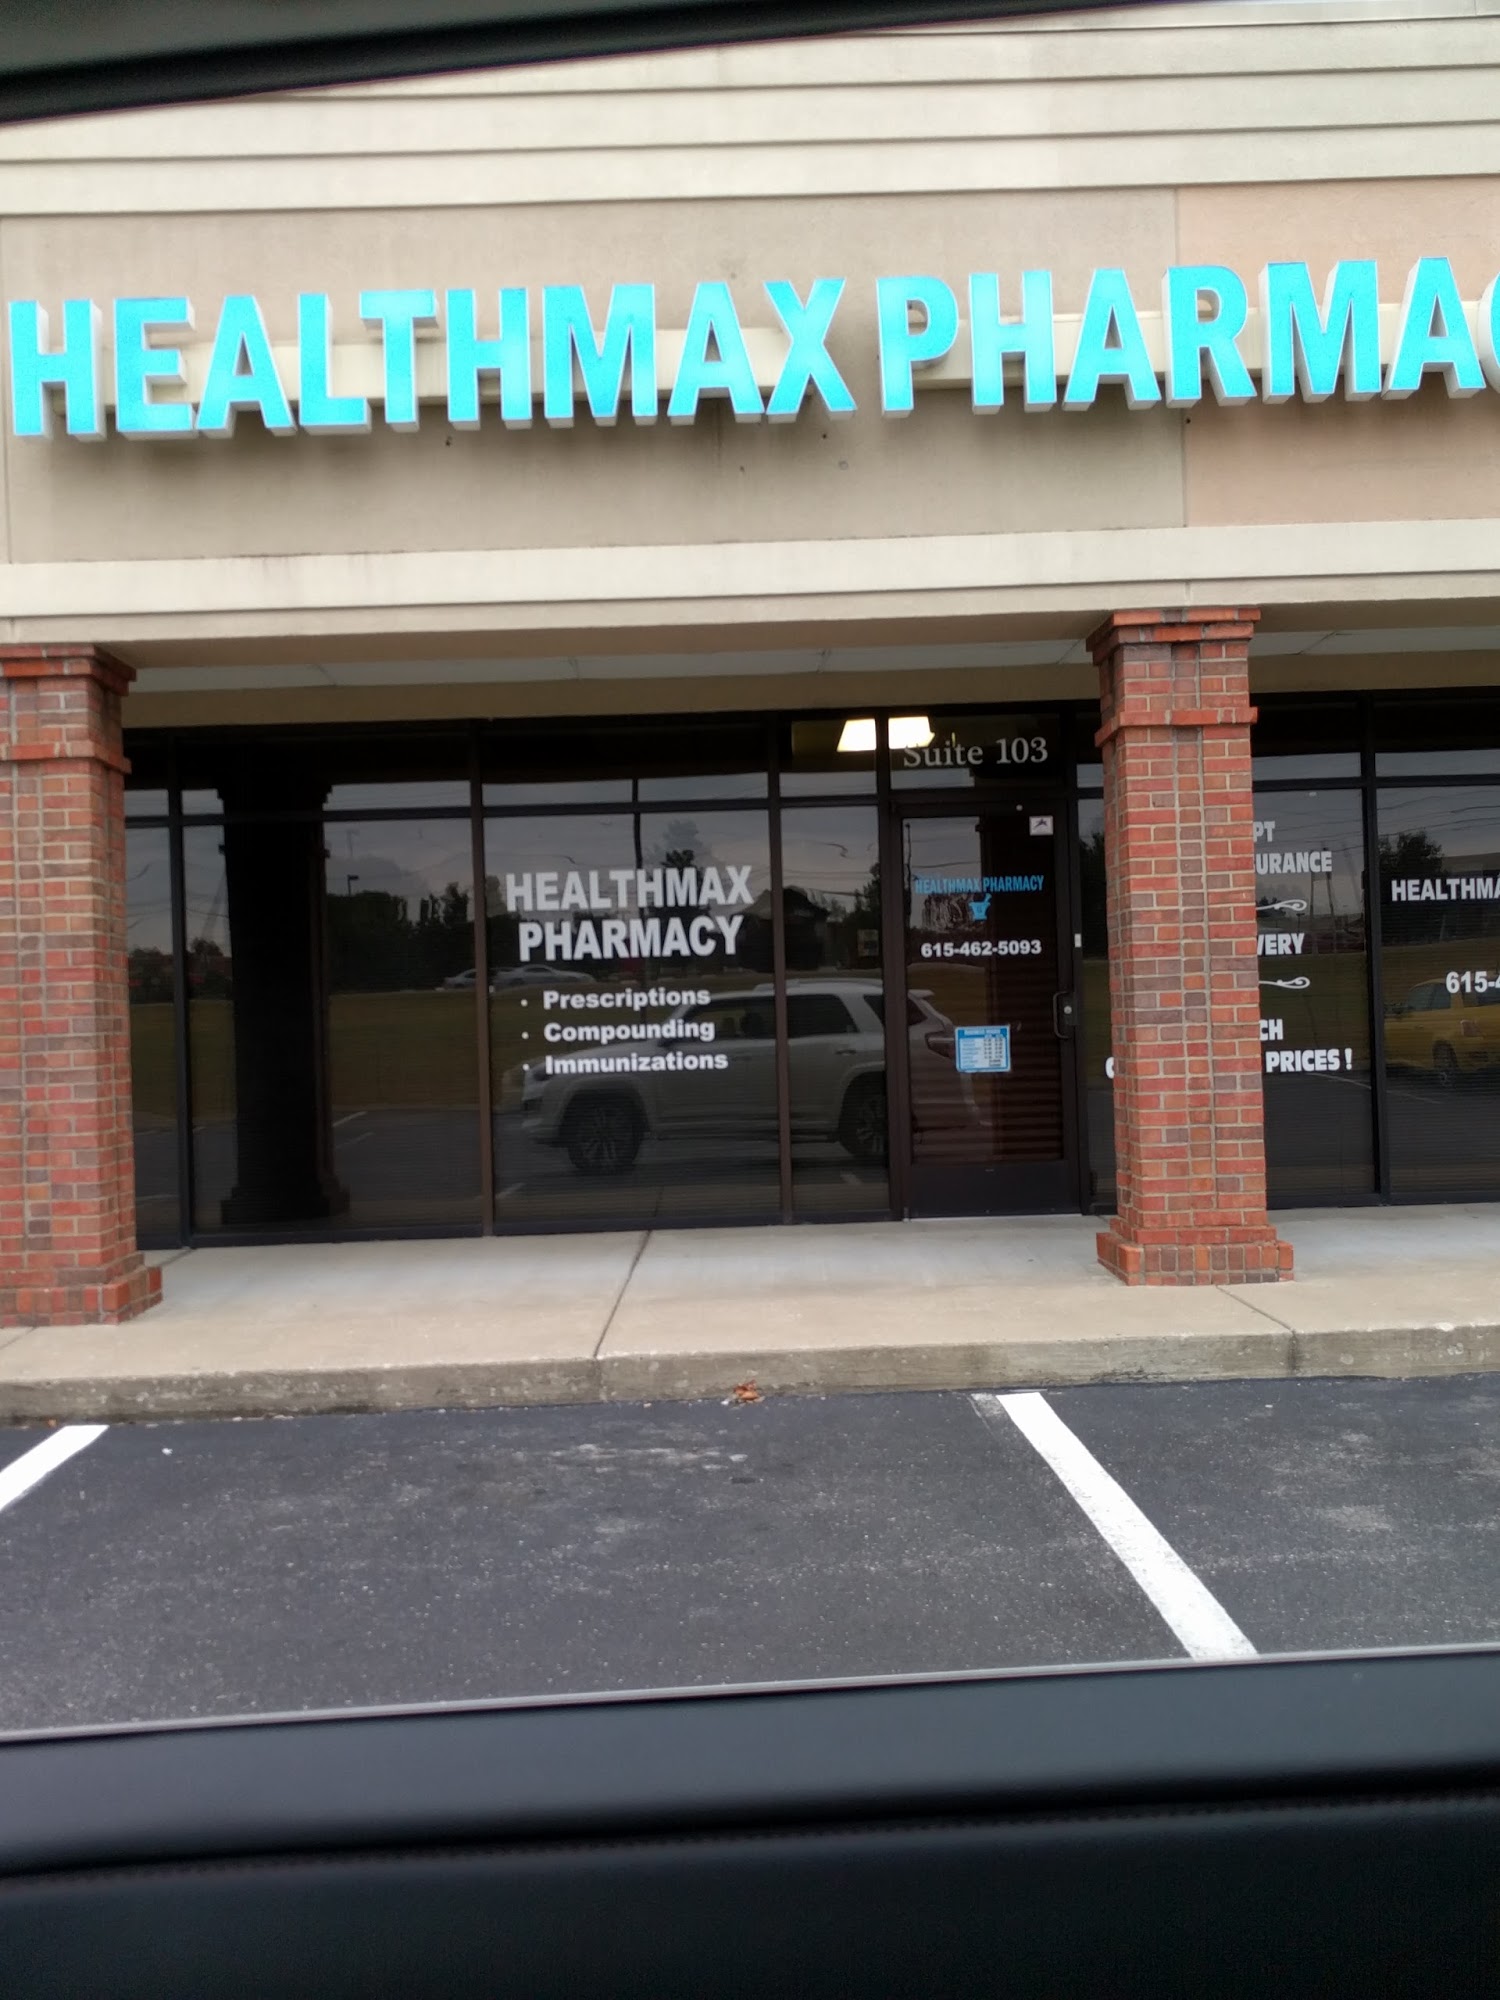 Healthmax Pharmacy